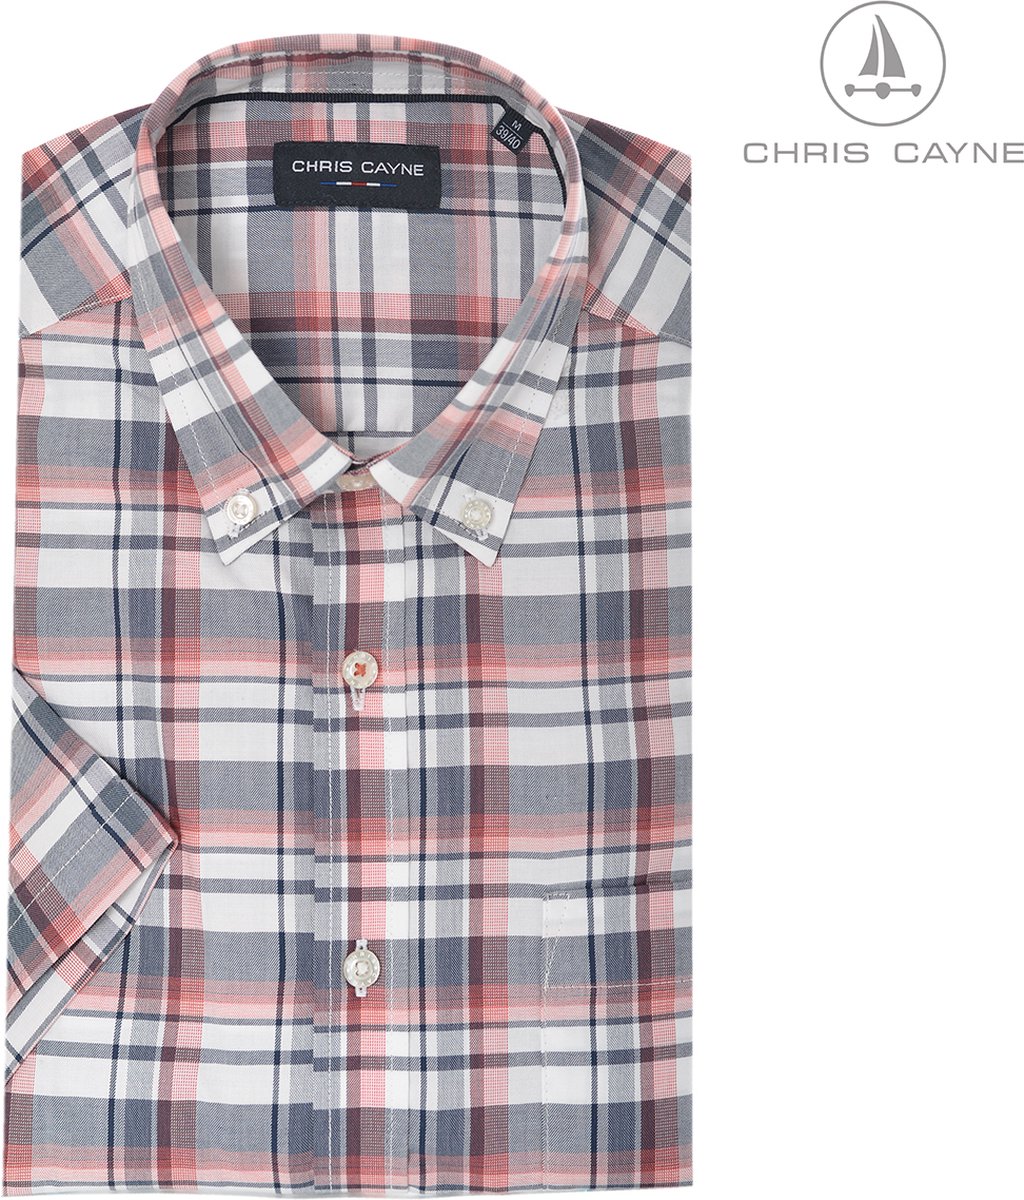 Chris Cayne heren blouse - overhemd 2210 wit/roze/grijs ruit - KM - maat XXL